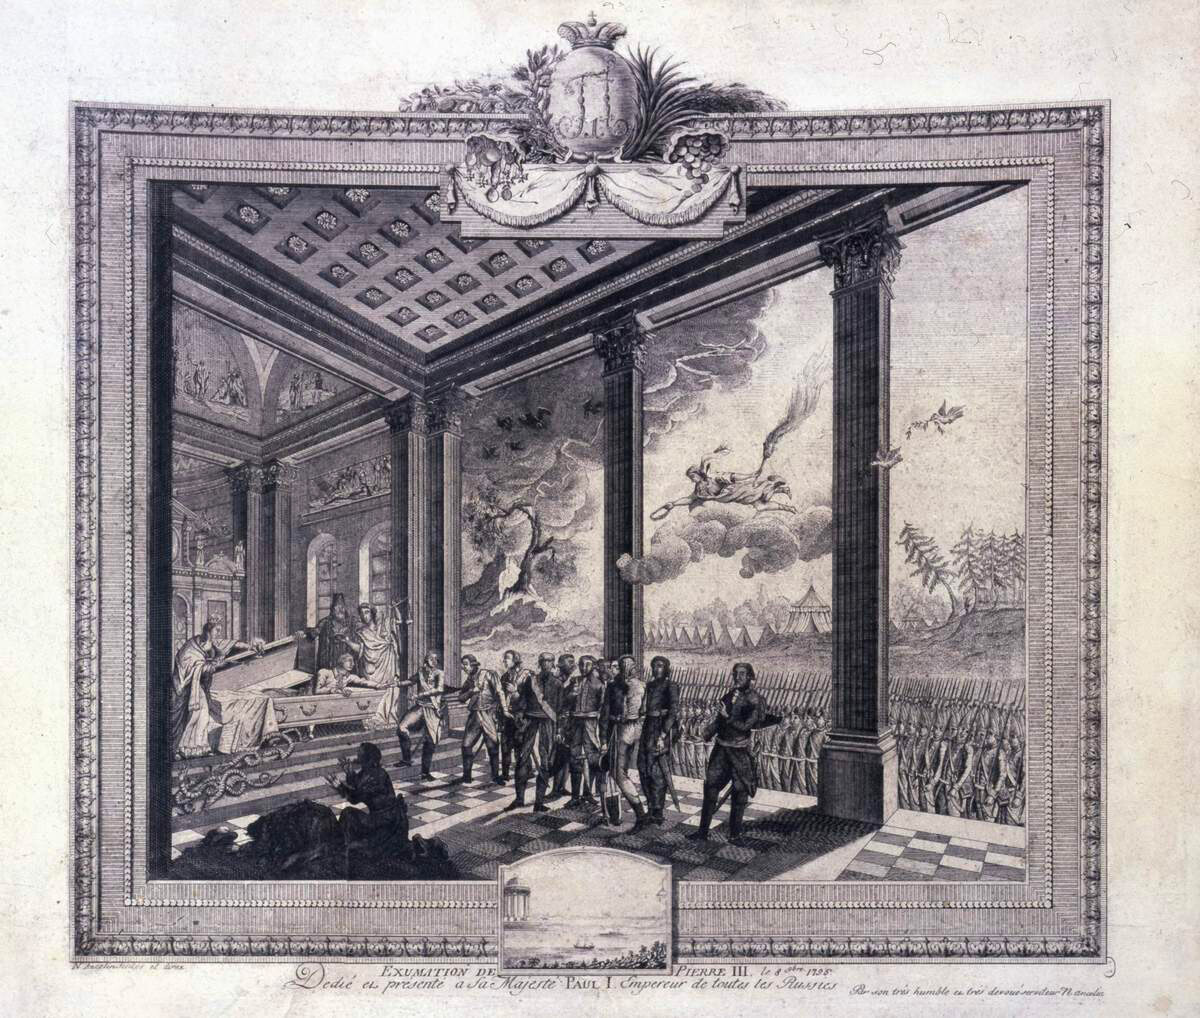 Anselen N. (A. N.), umetnik s konca 18. stoletja. Ponovni pogreb Petra III. 